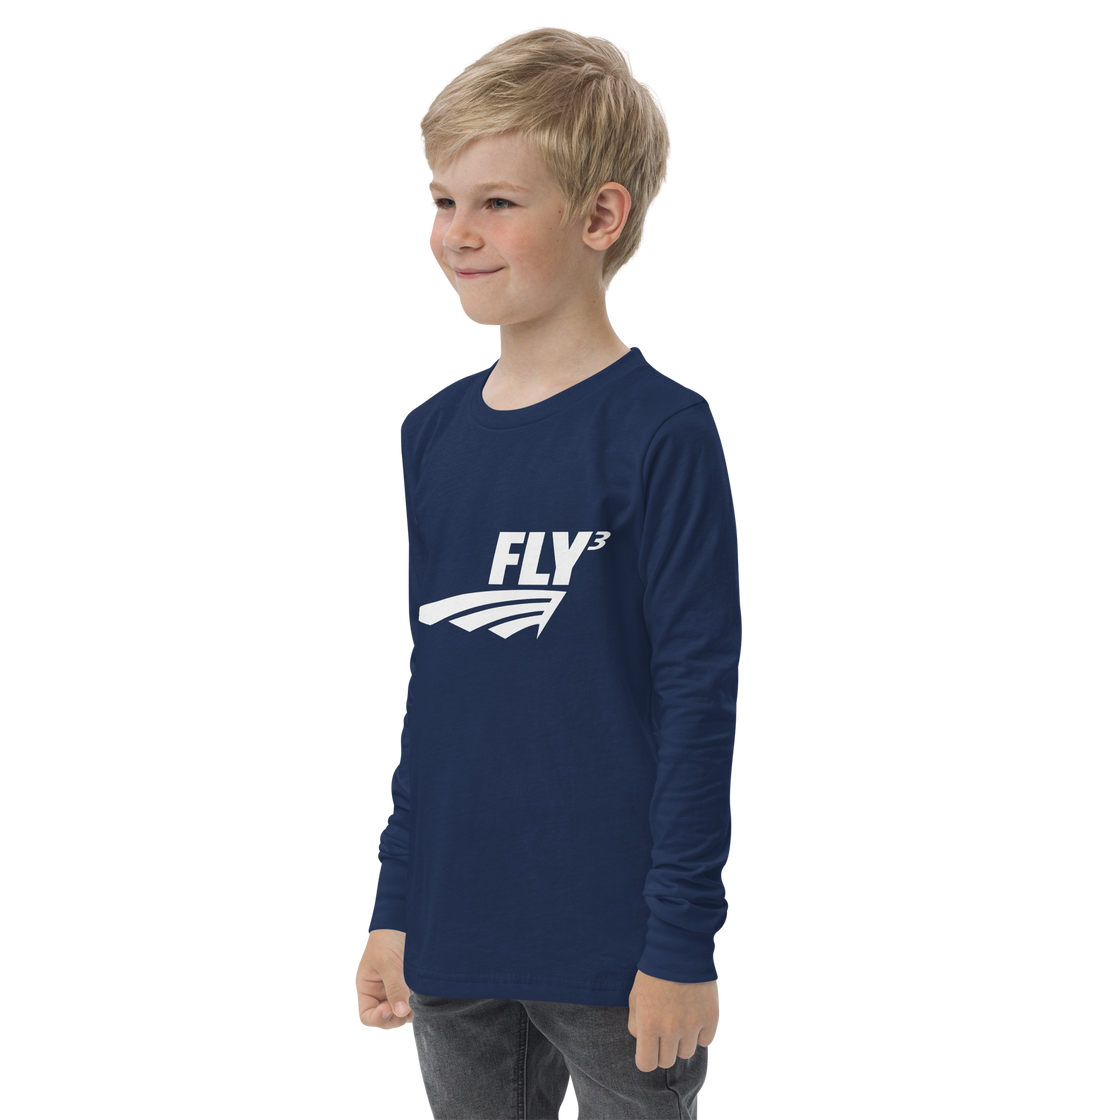 FLY³ Youth long sleeve tee | Flycube